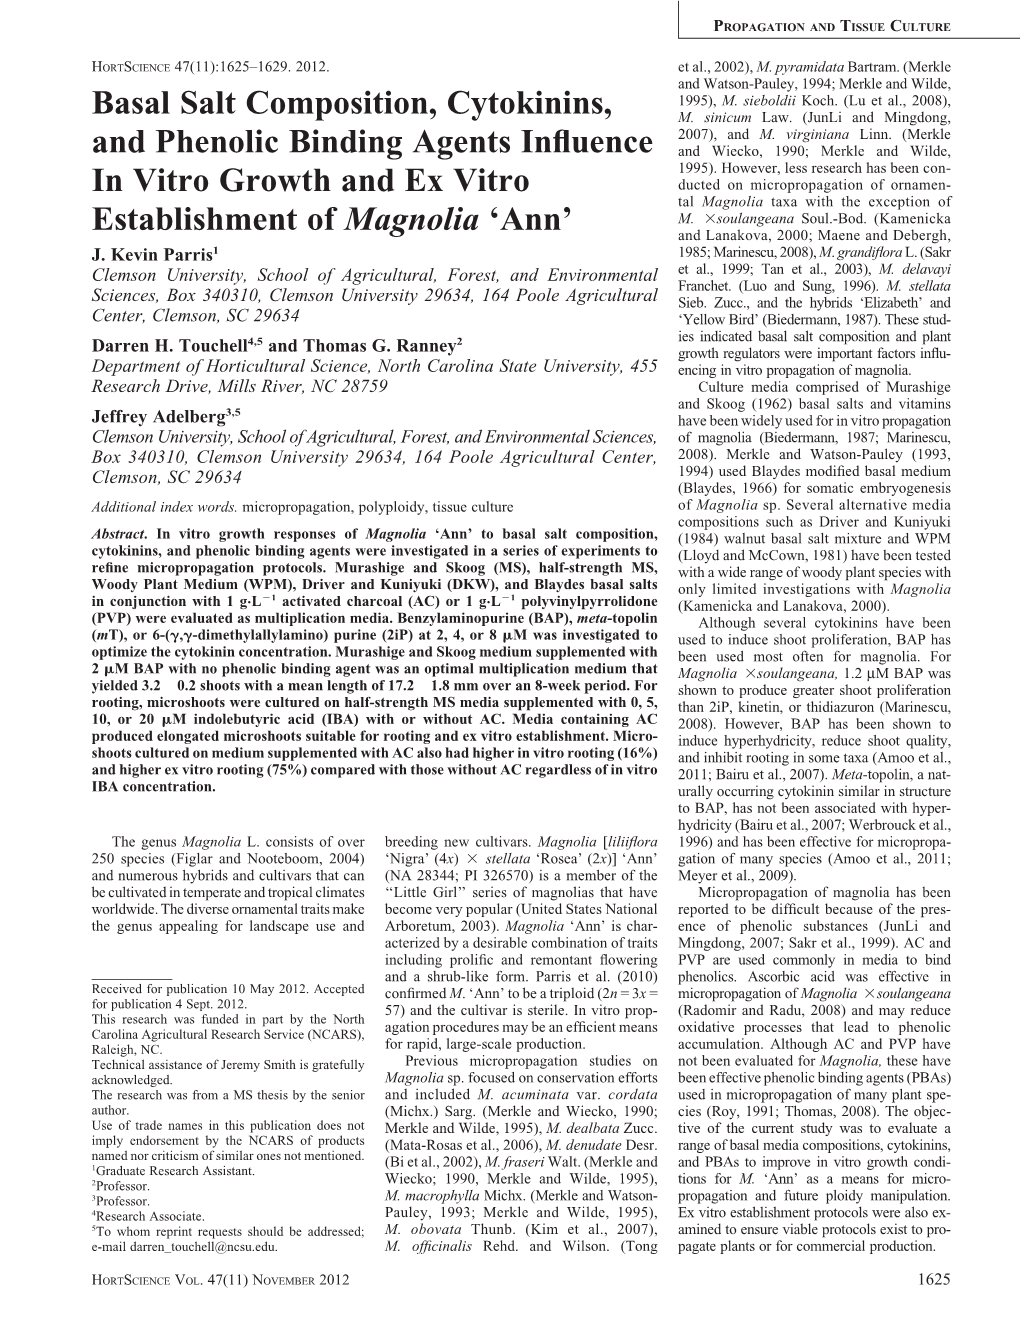 Basal Salt Composition, Cytokinins, and Phenolic Binding Agents Influence in Vitro Growth and Ex Vitro Establishment of Magnolia